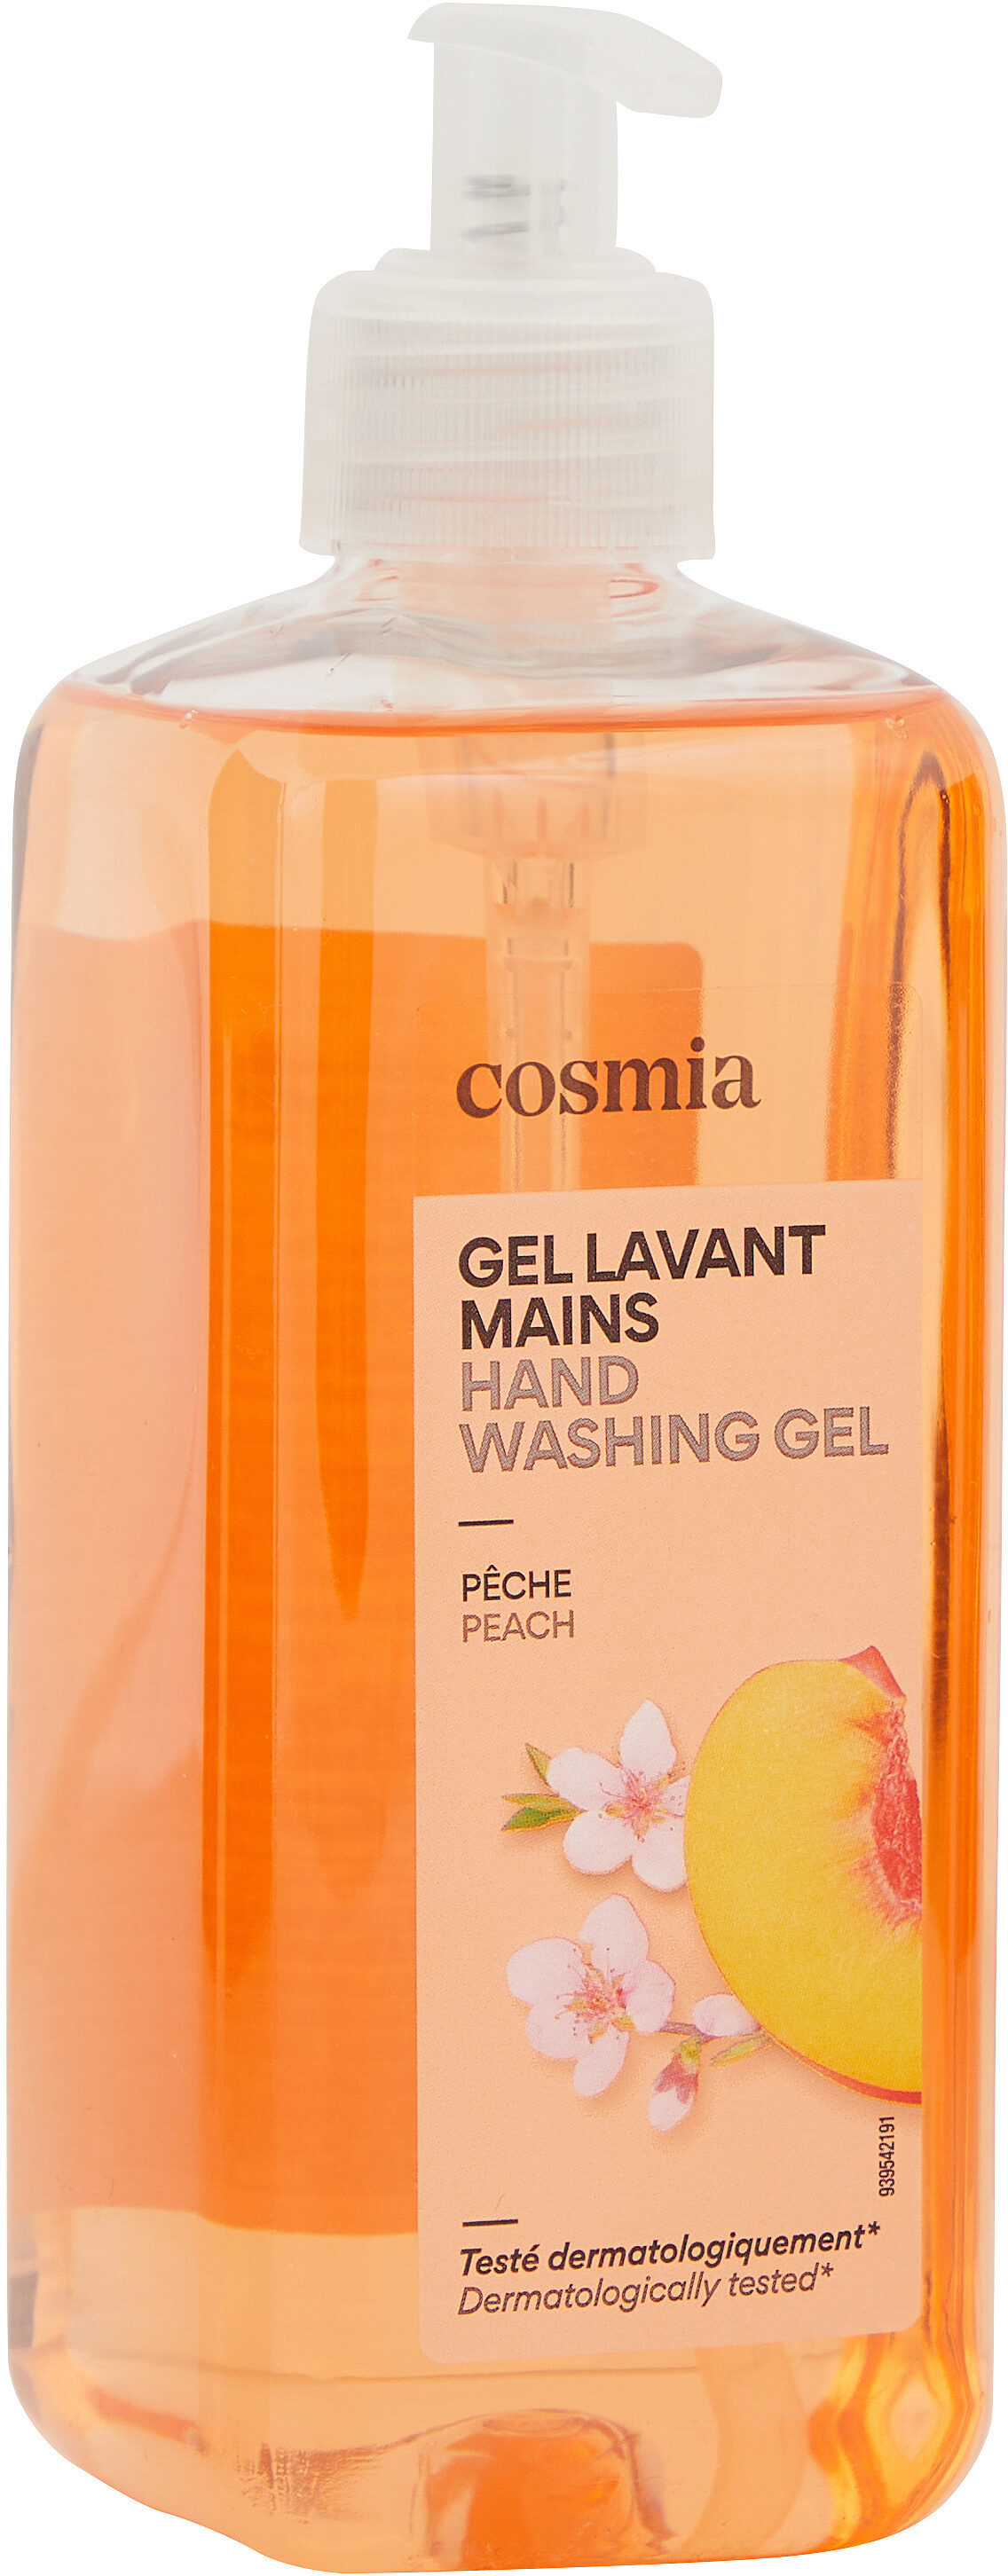 Cosmia savon main fleur de peche 500 ml - Produkt - fr